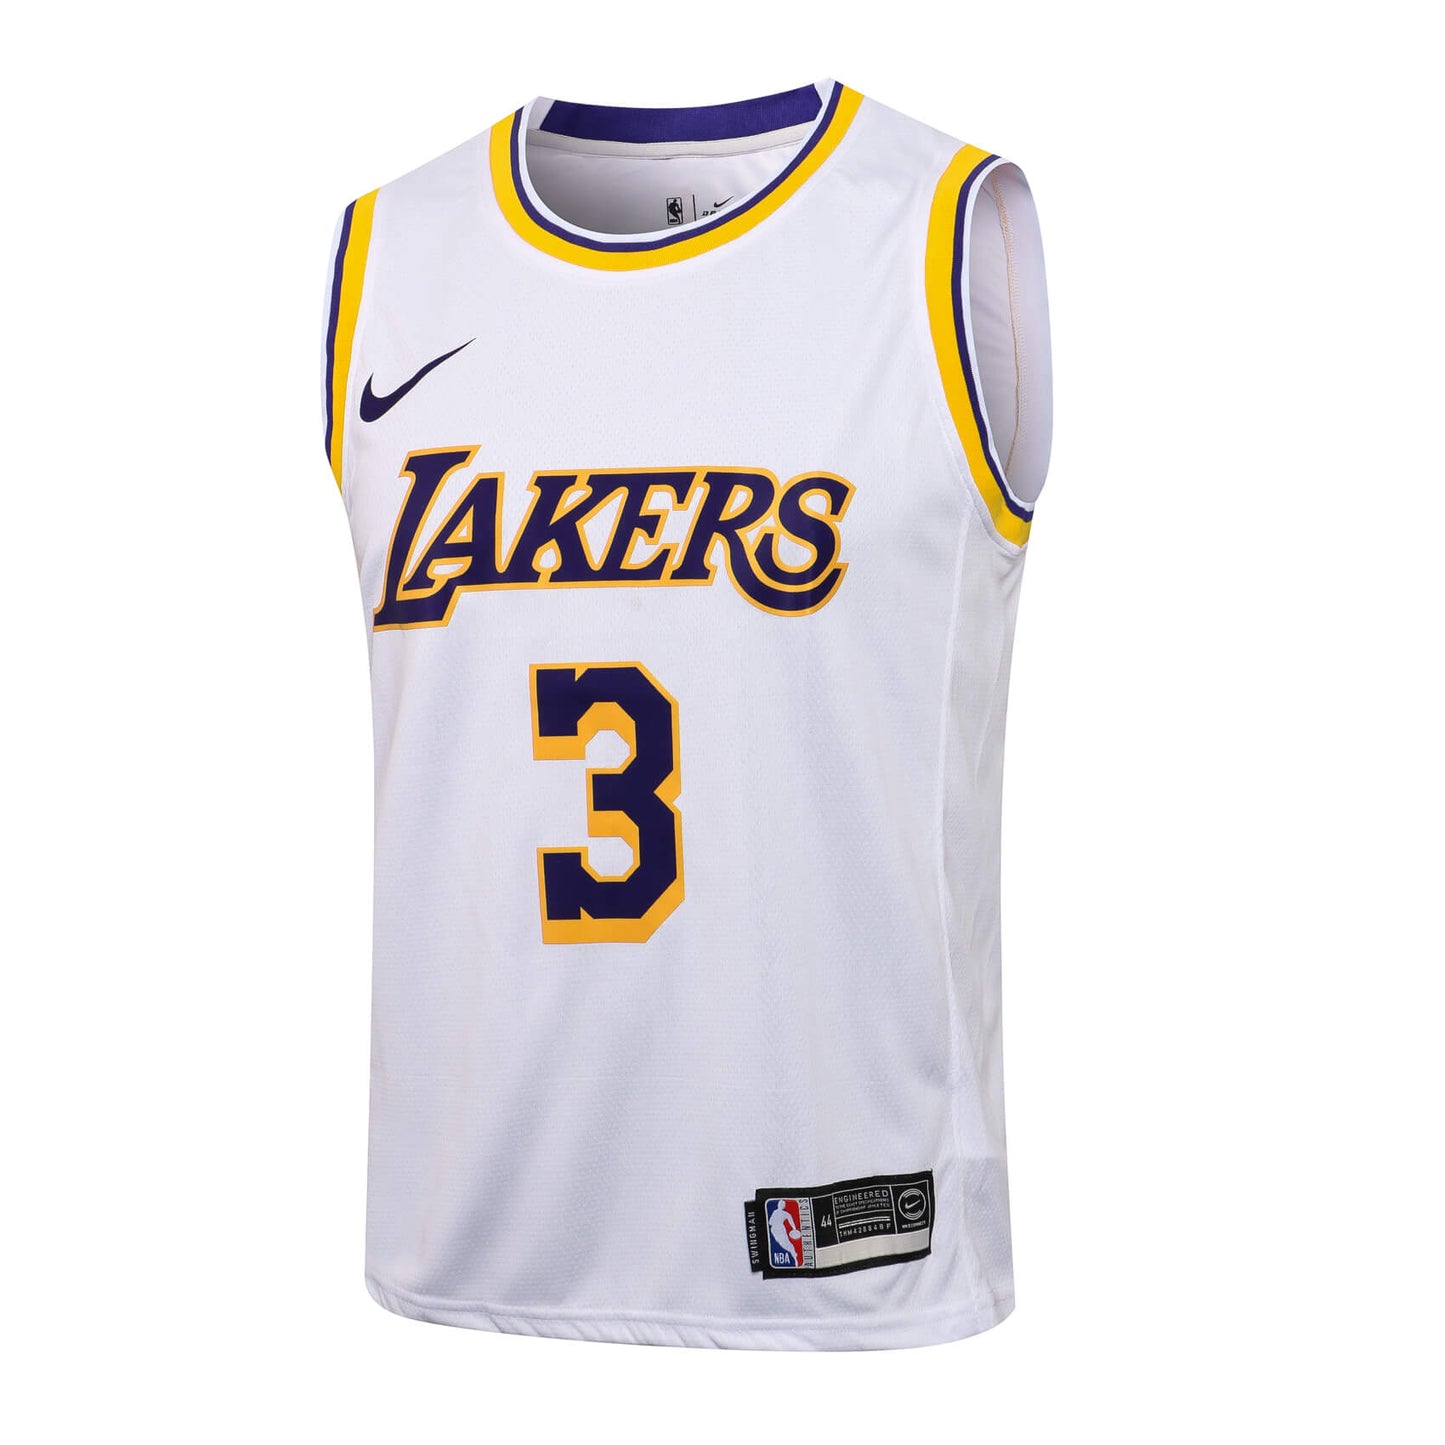 Regata NBA Los Angeles Lakers Davis n°3  Masculina - Branco+Amarelo